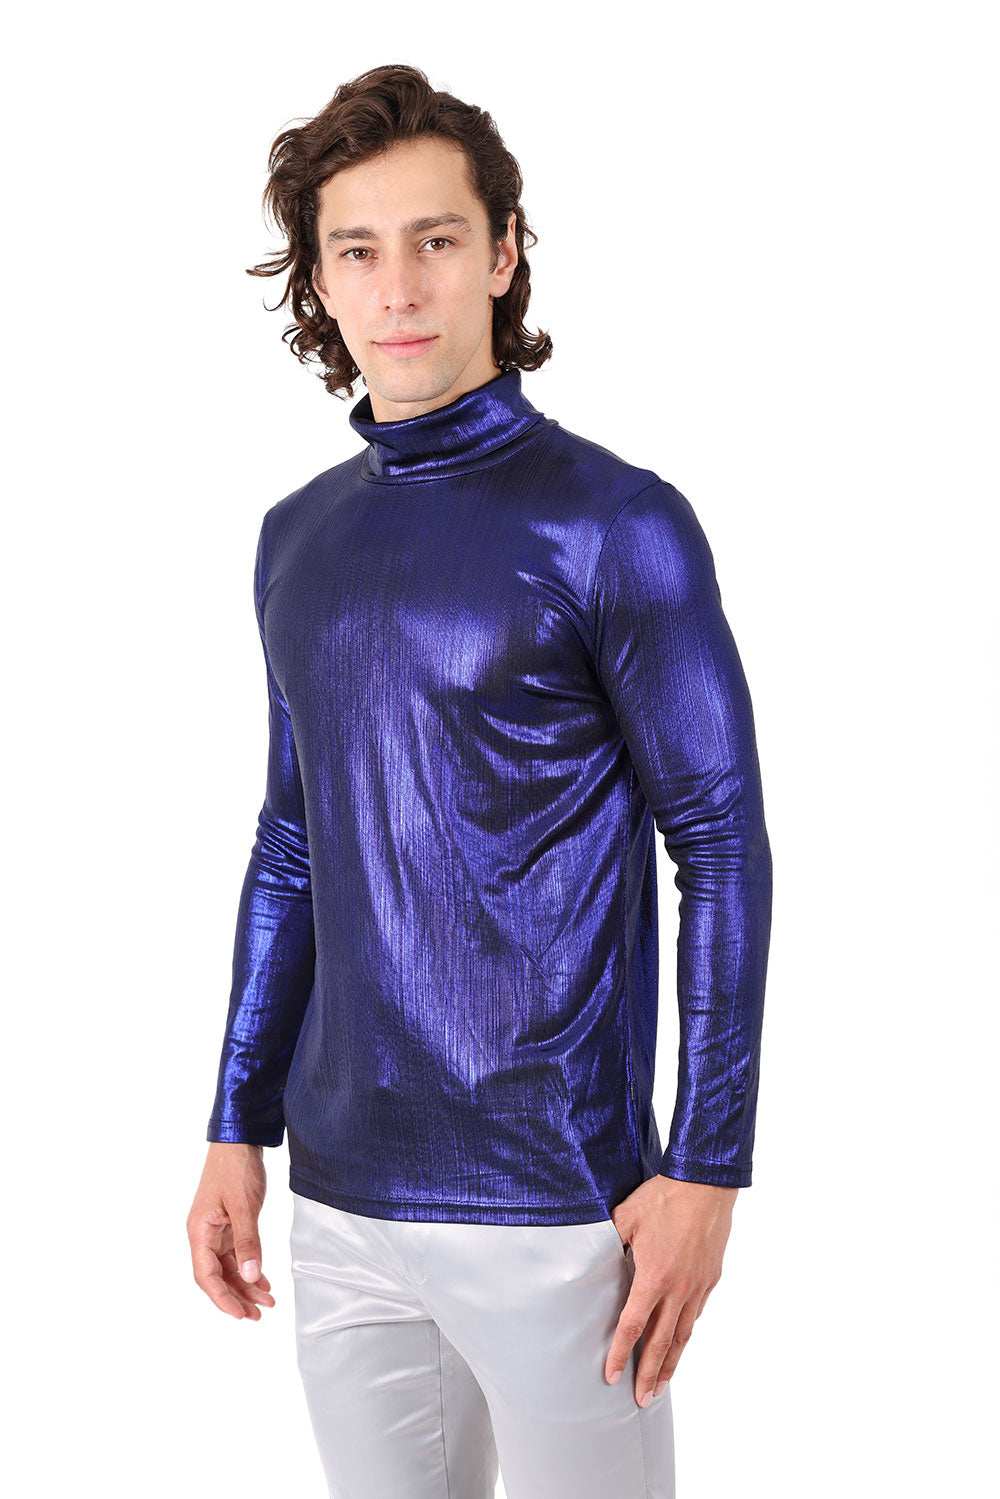 Barabas Men's Metallic Shiny Long Sleeve Turtleneck Sweater 2KT1000 Royal